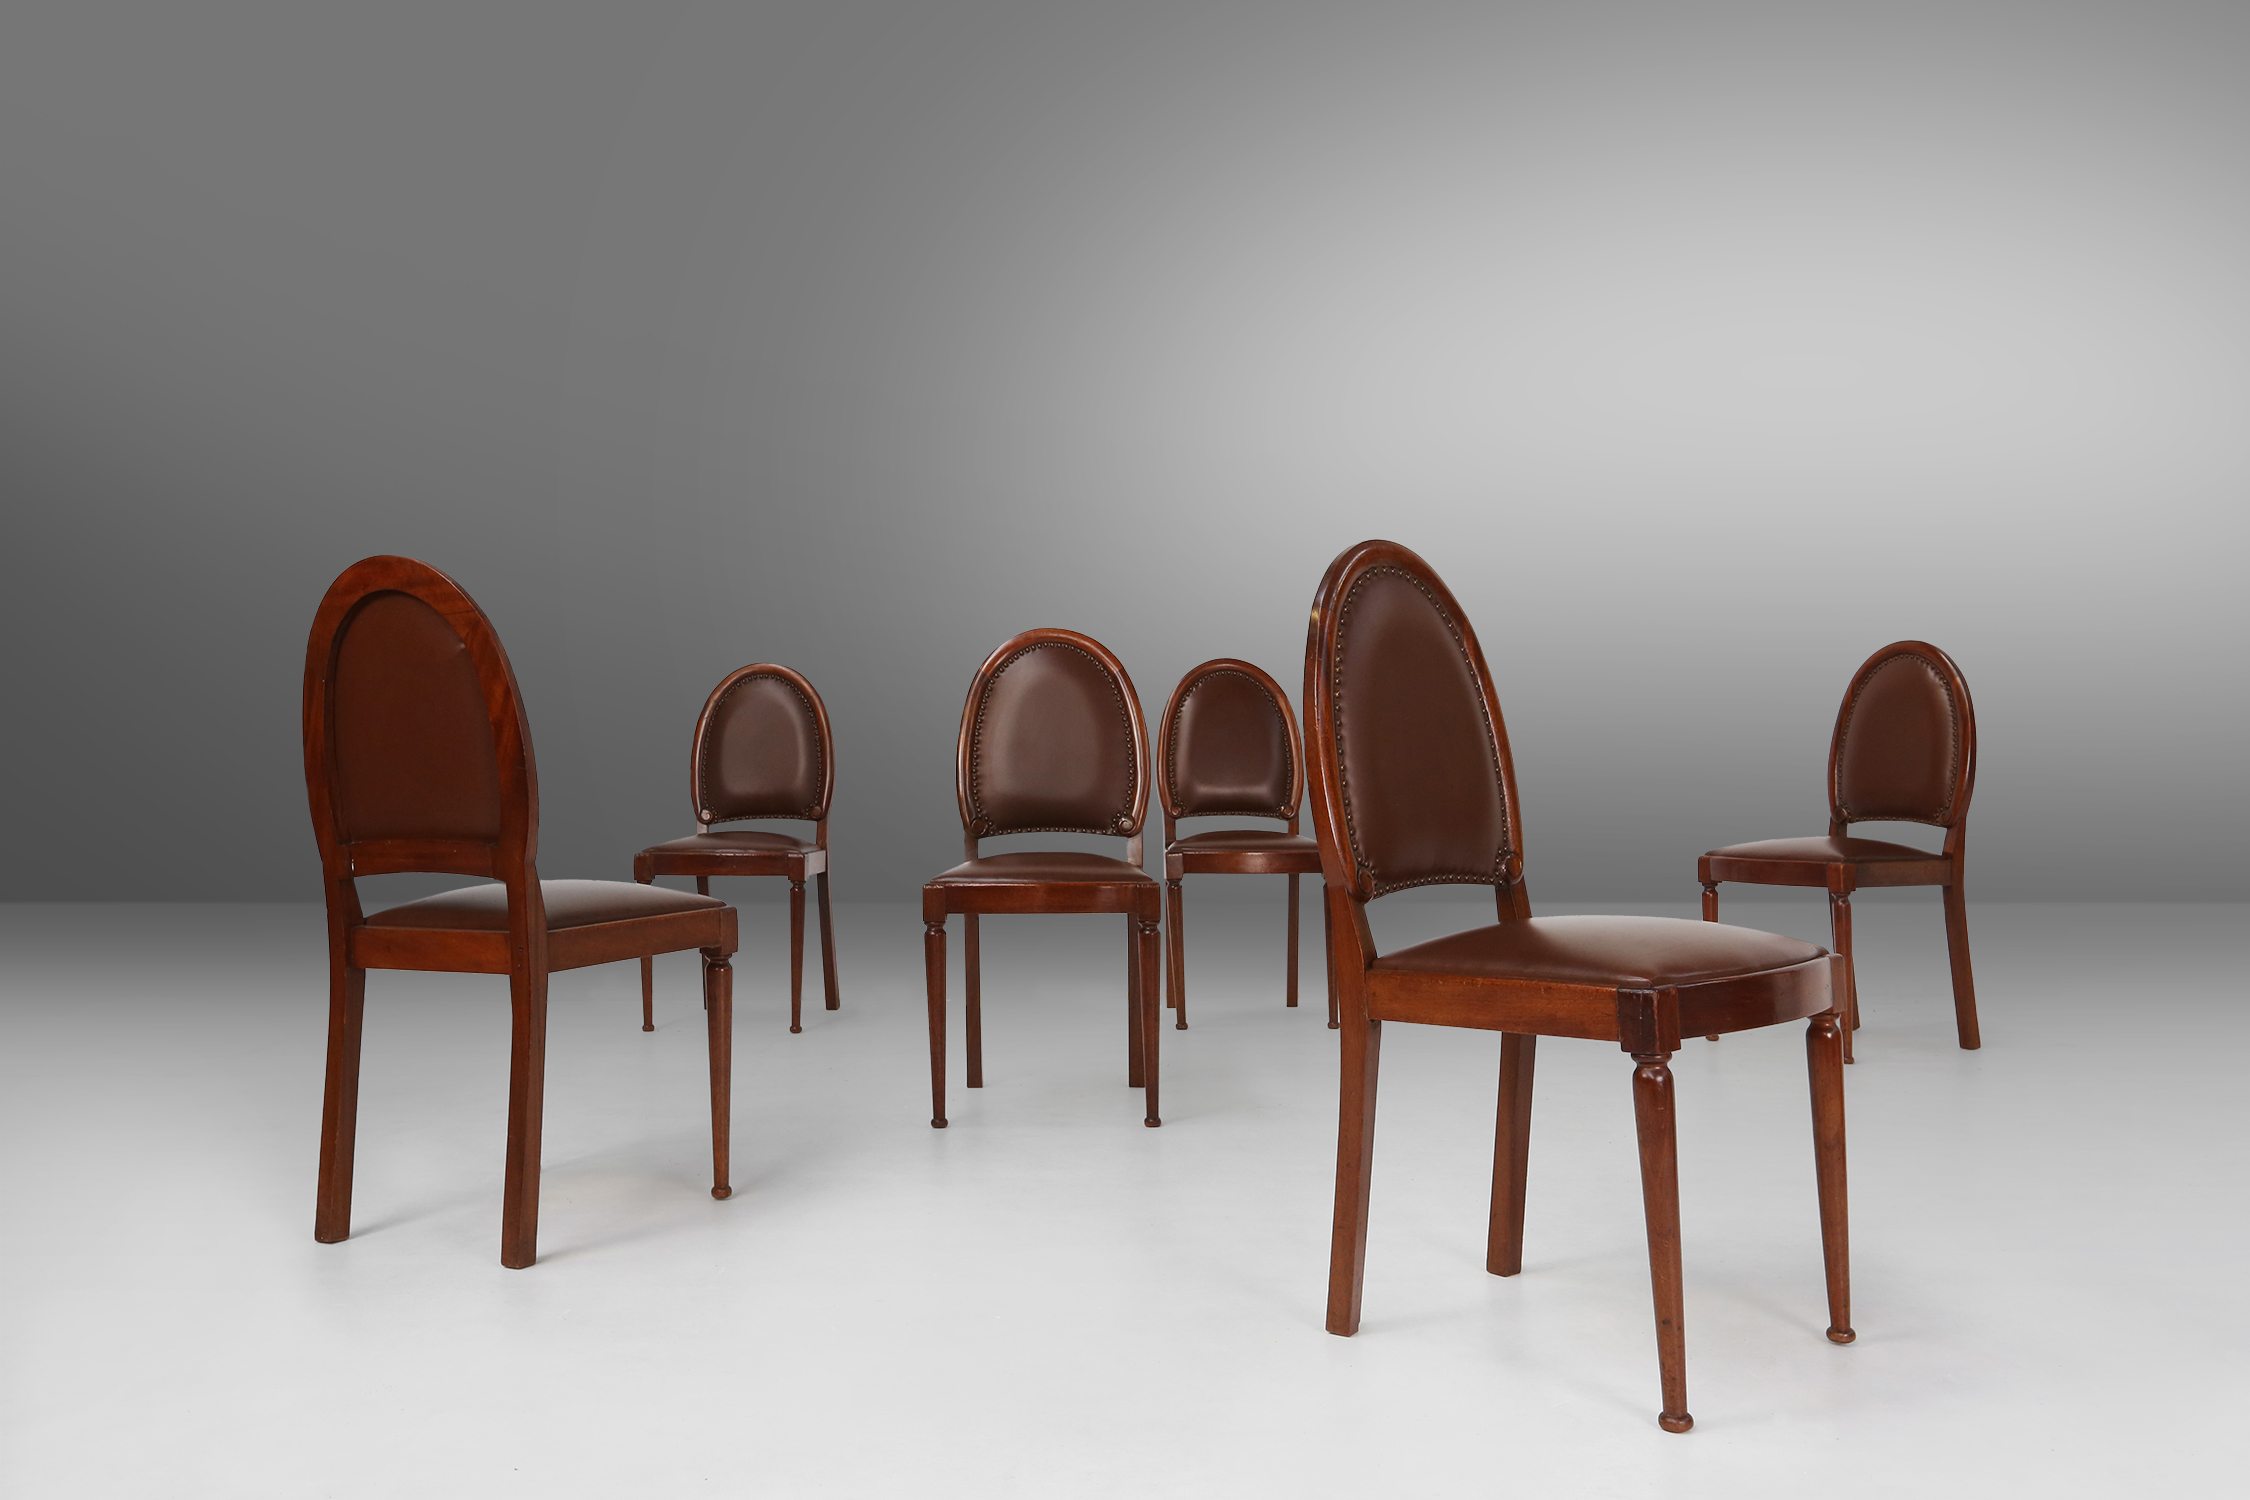 Art Deco set of six chairs by De Coene 1930thumbnail